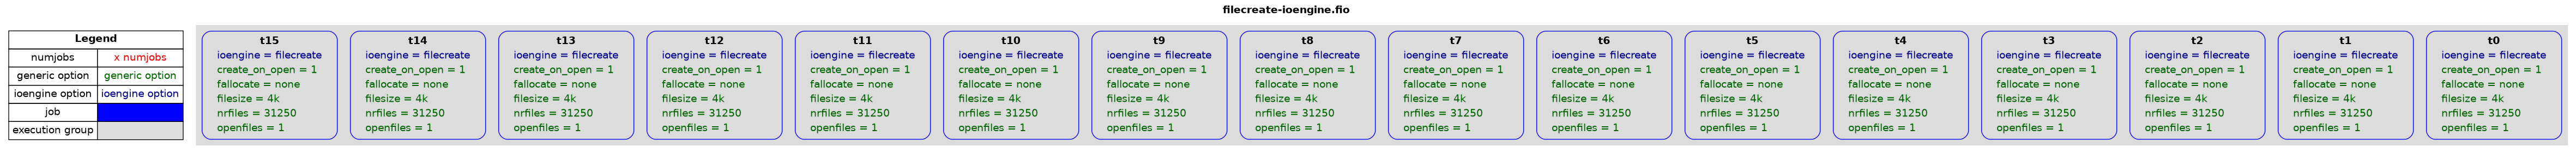 examples/filecreate-ioengine.png